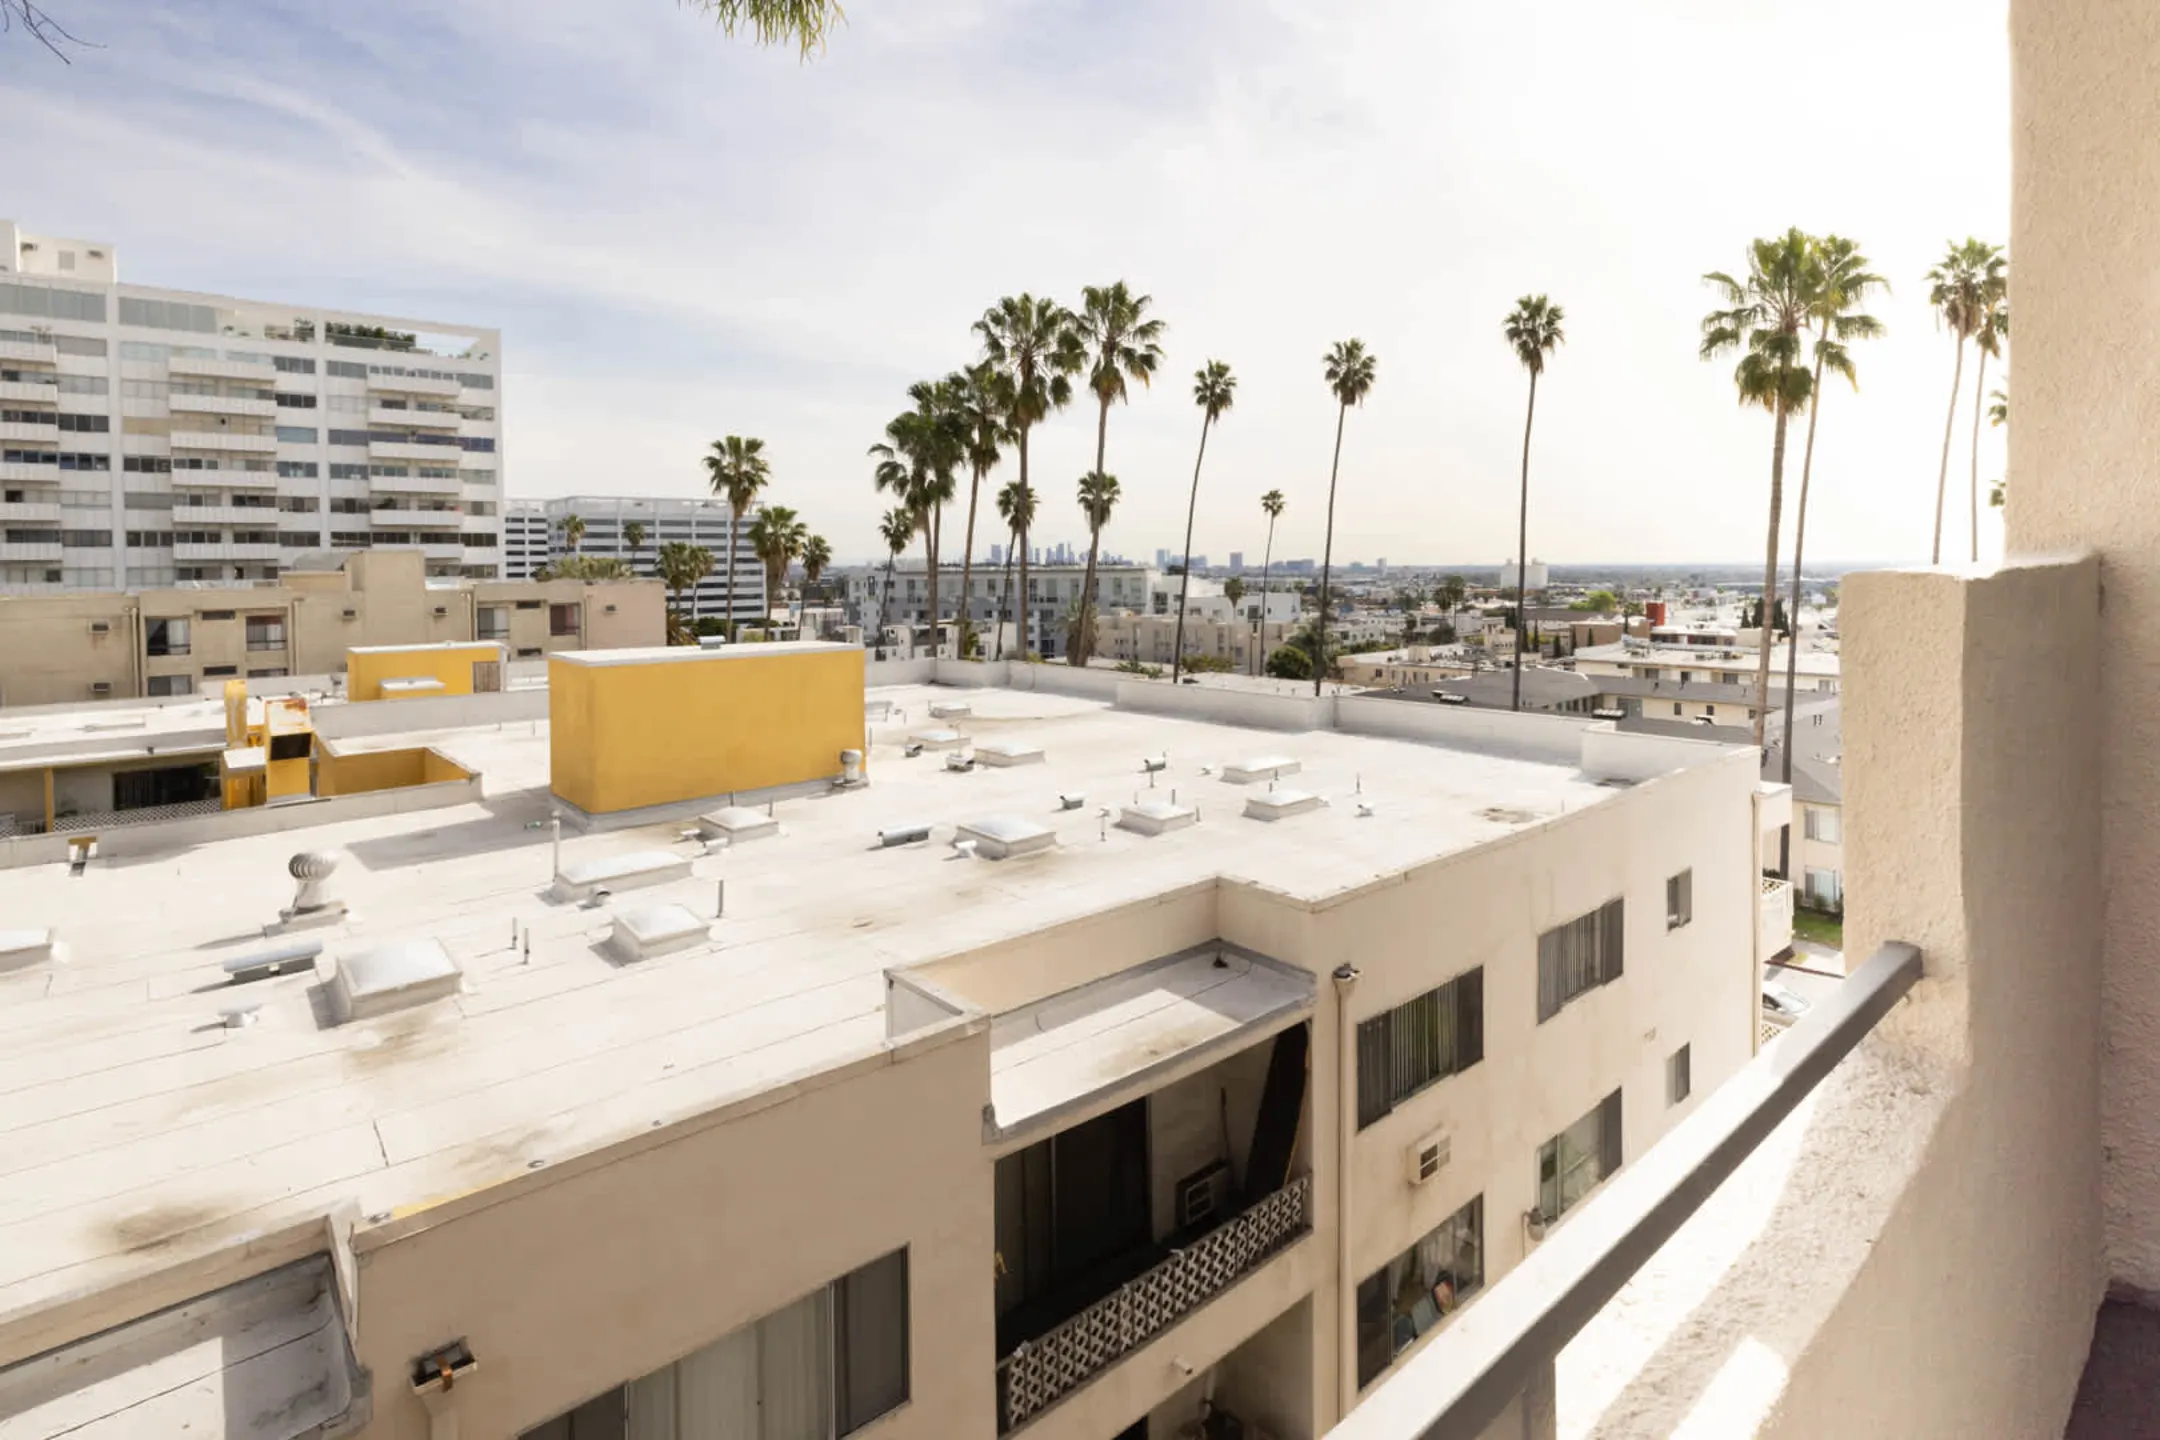 Vantage Hollywood Apartments - Los Angeles, CA